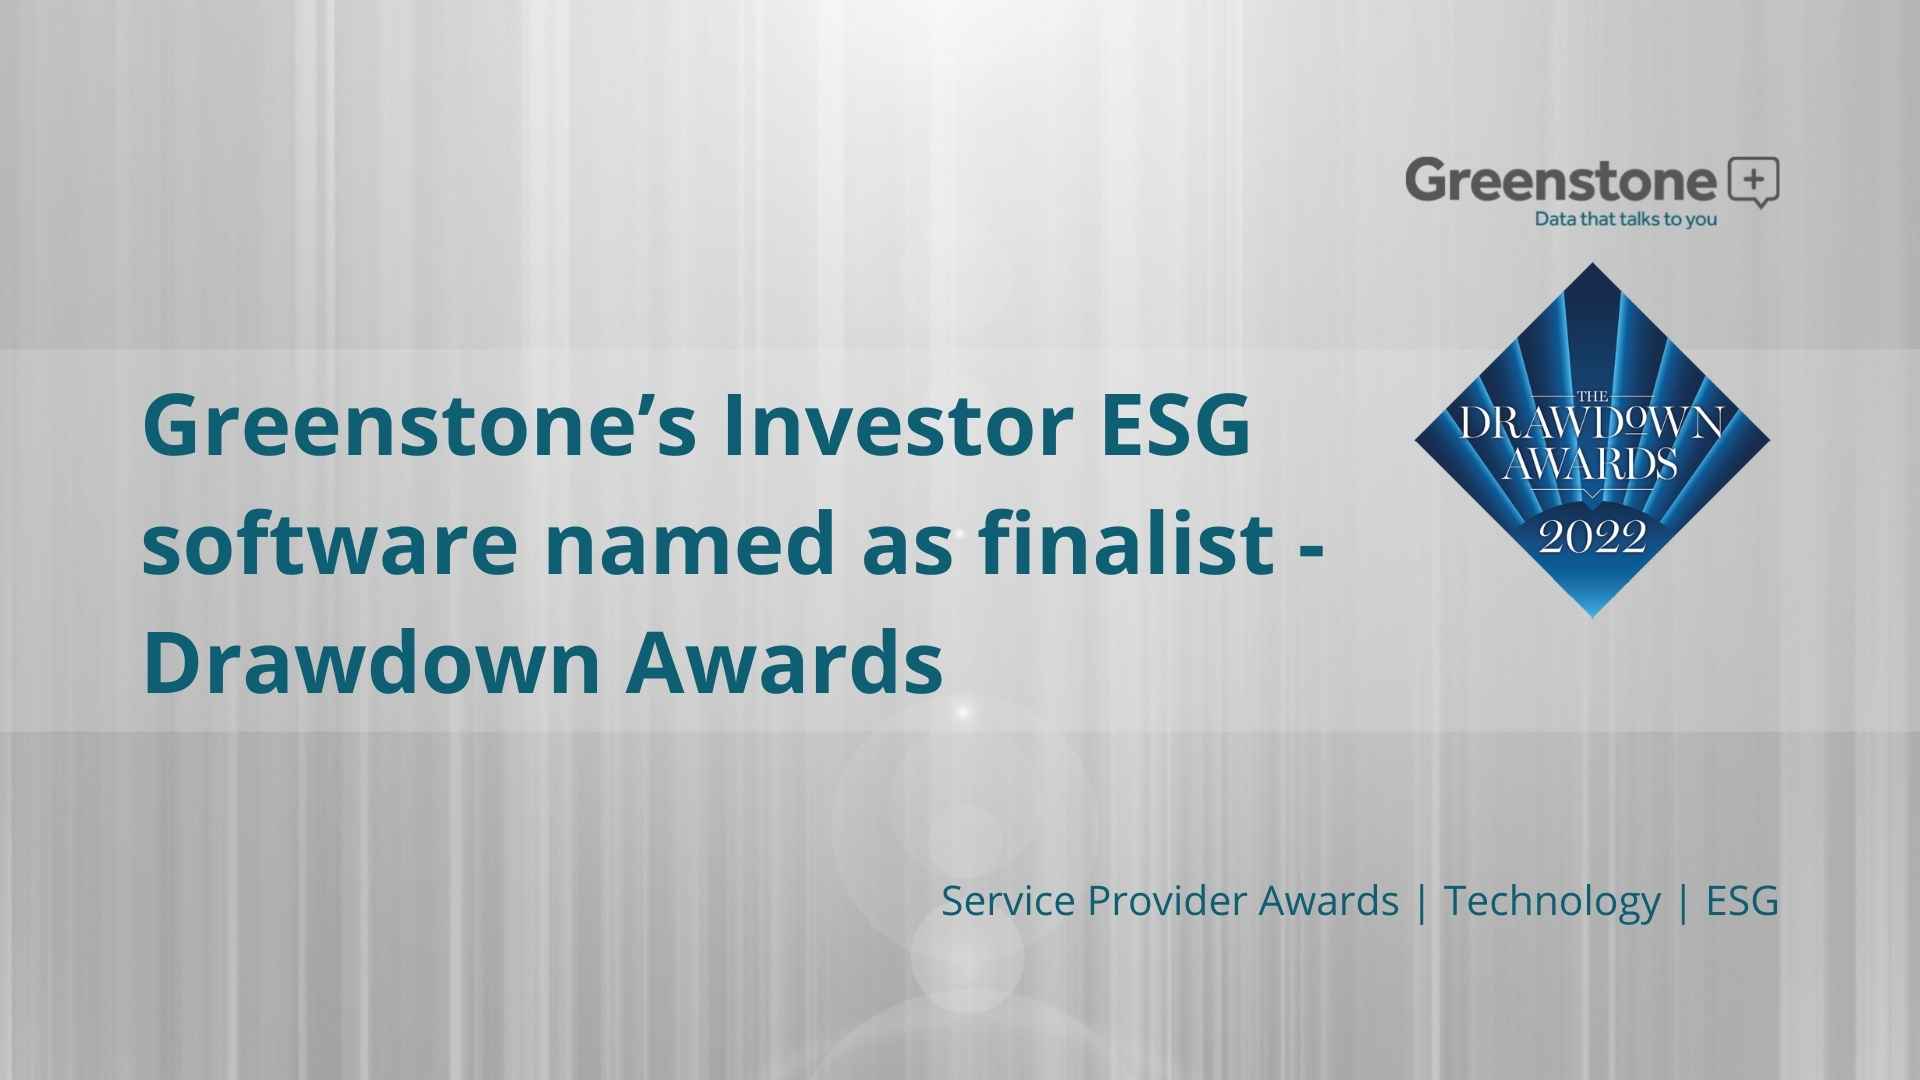 Greenstone’s investor ESG software named as finalist - Drawdown Awards